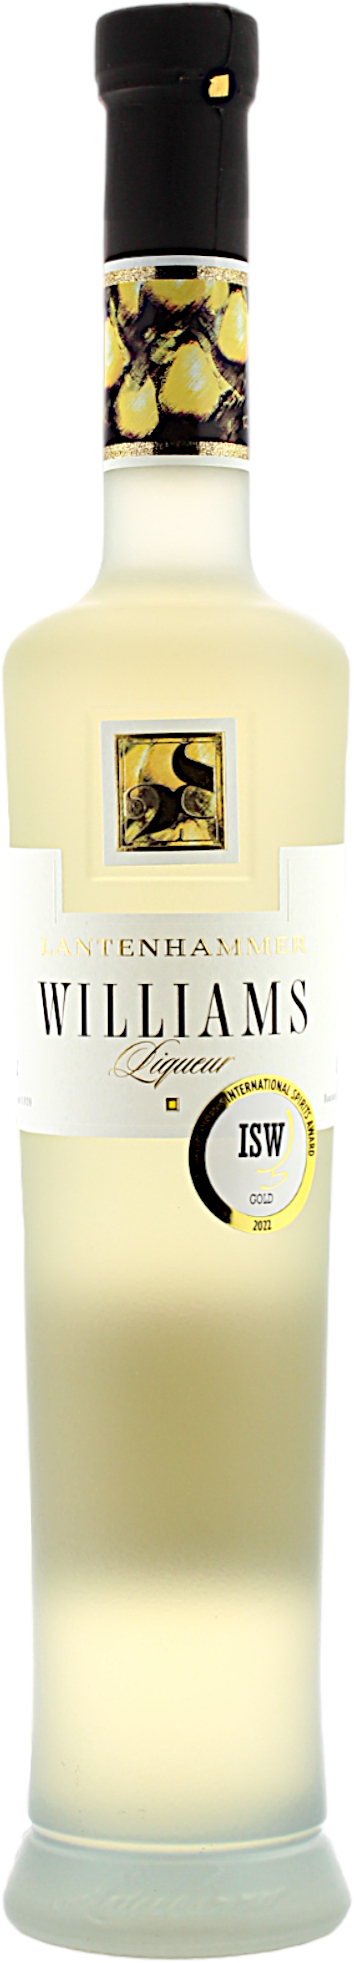 Lantenhammer Williams Liqueur 25.0% 0,5l